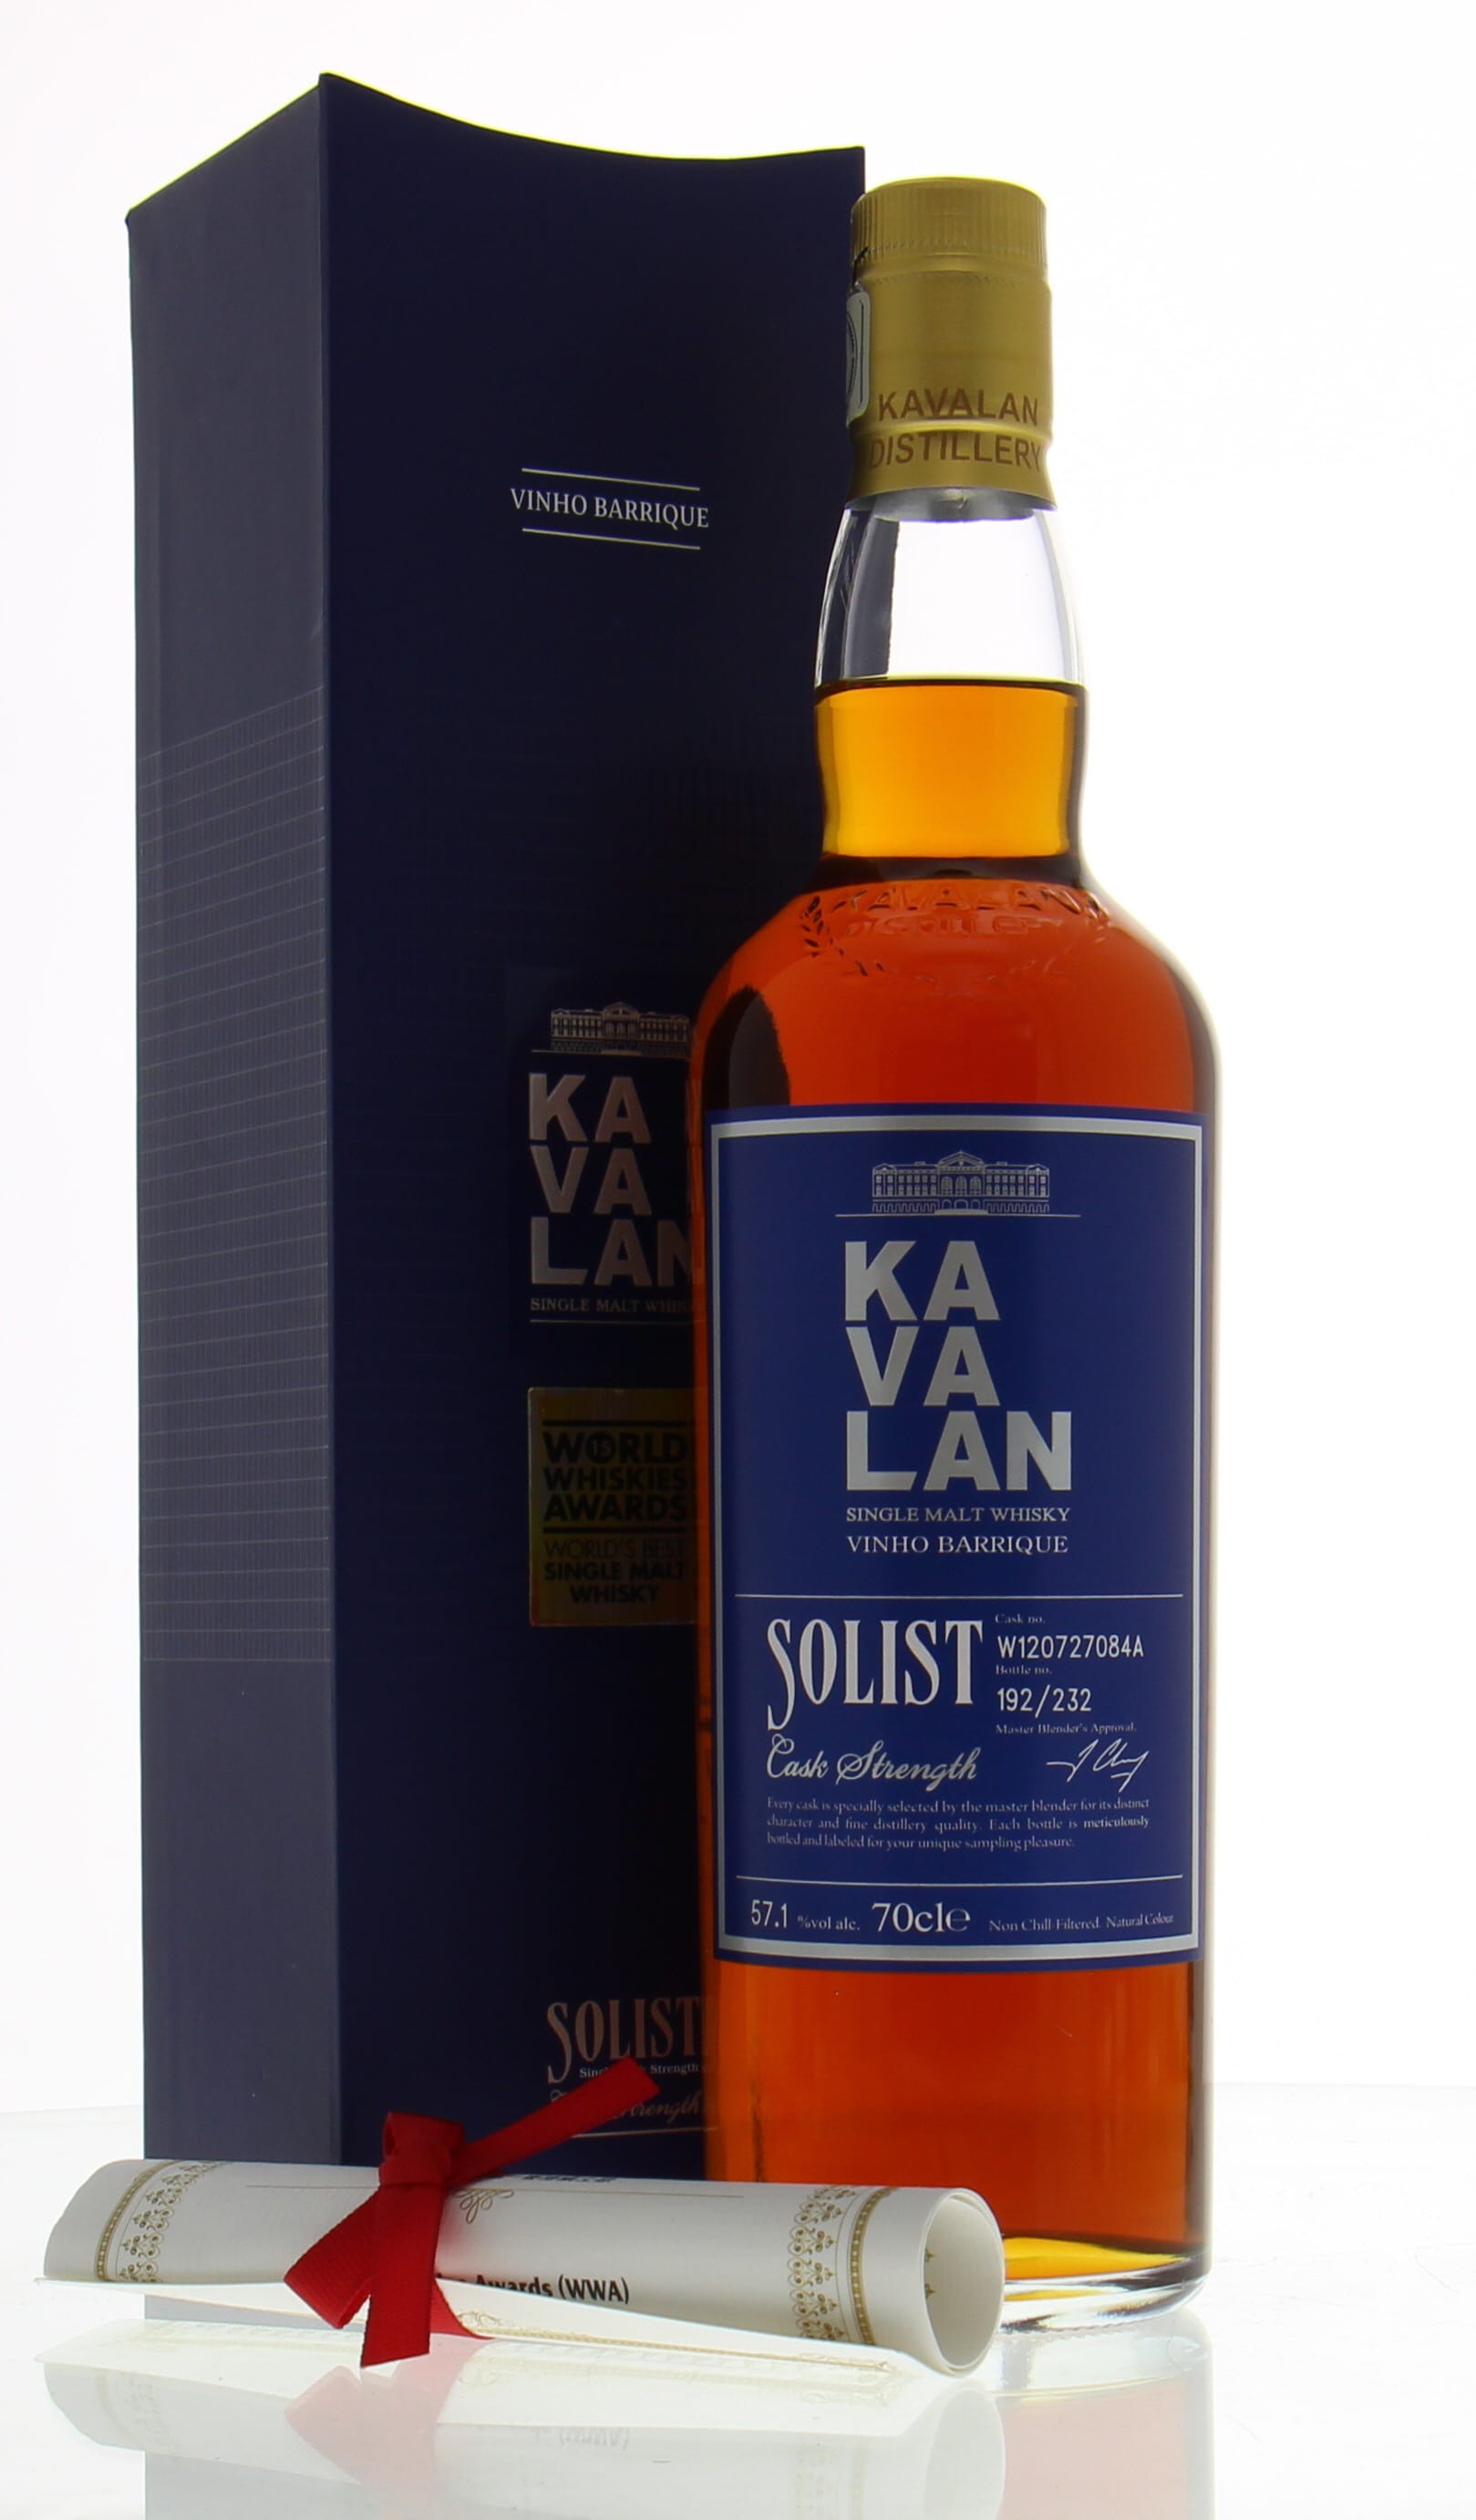 Kavalan - Solist Vinho Barrique Cask W120727084A World's best single malt whisky 2015 57,1% 2012